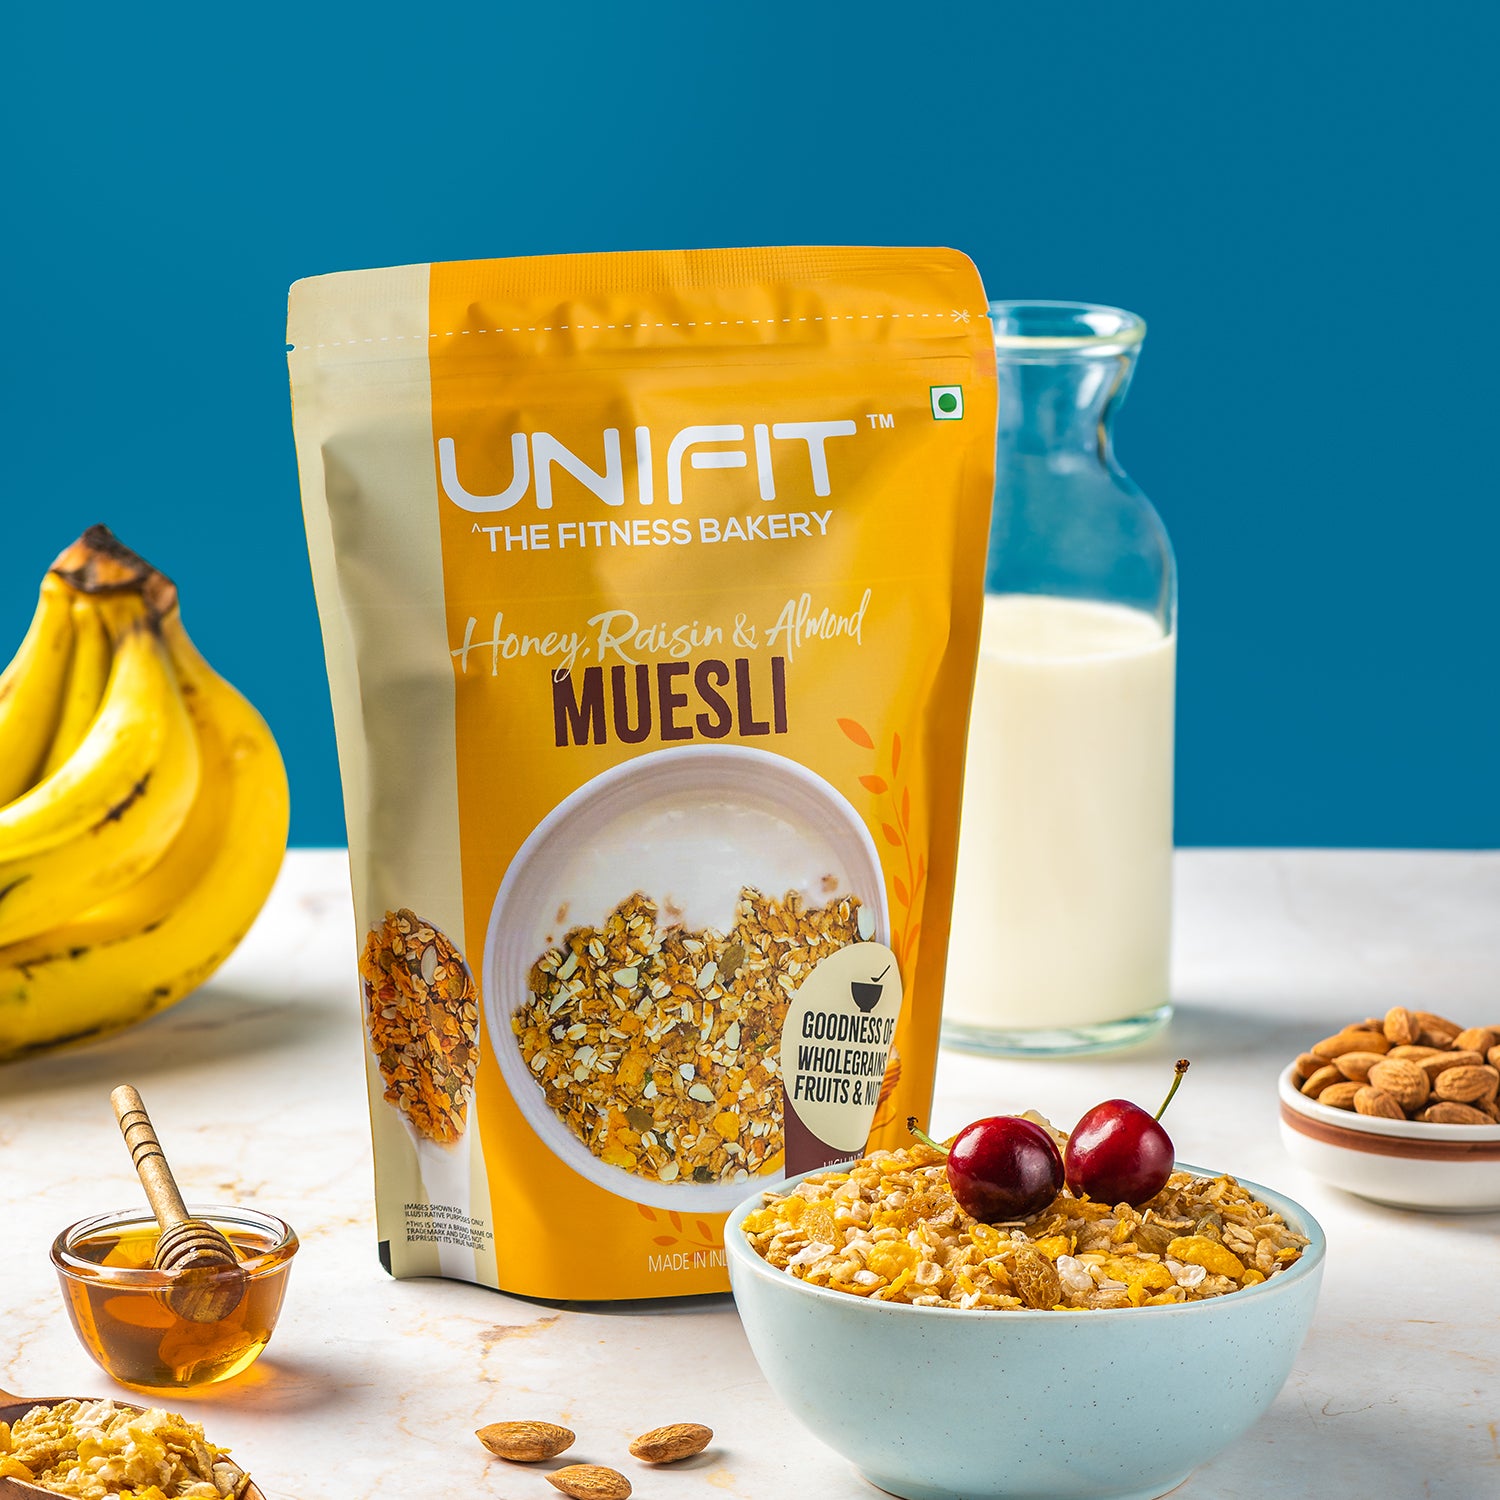 UNIFIT Muesli with Honey, Raisins & Almonds: Wholesome Breakfast Choice. 